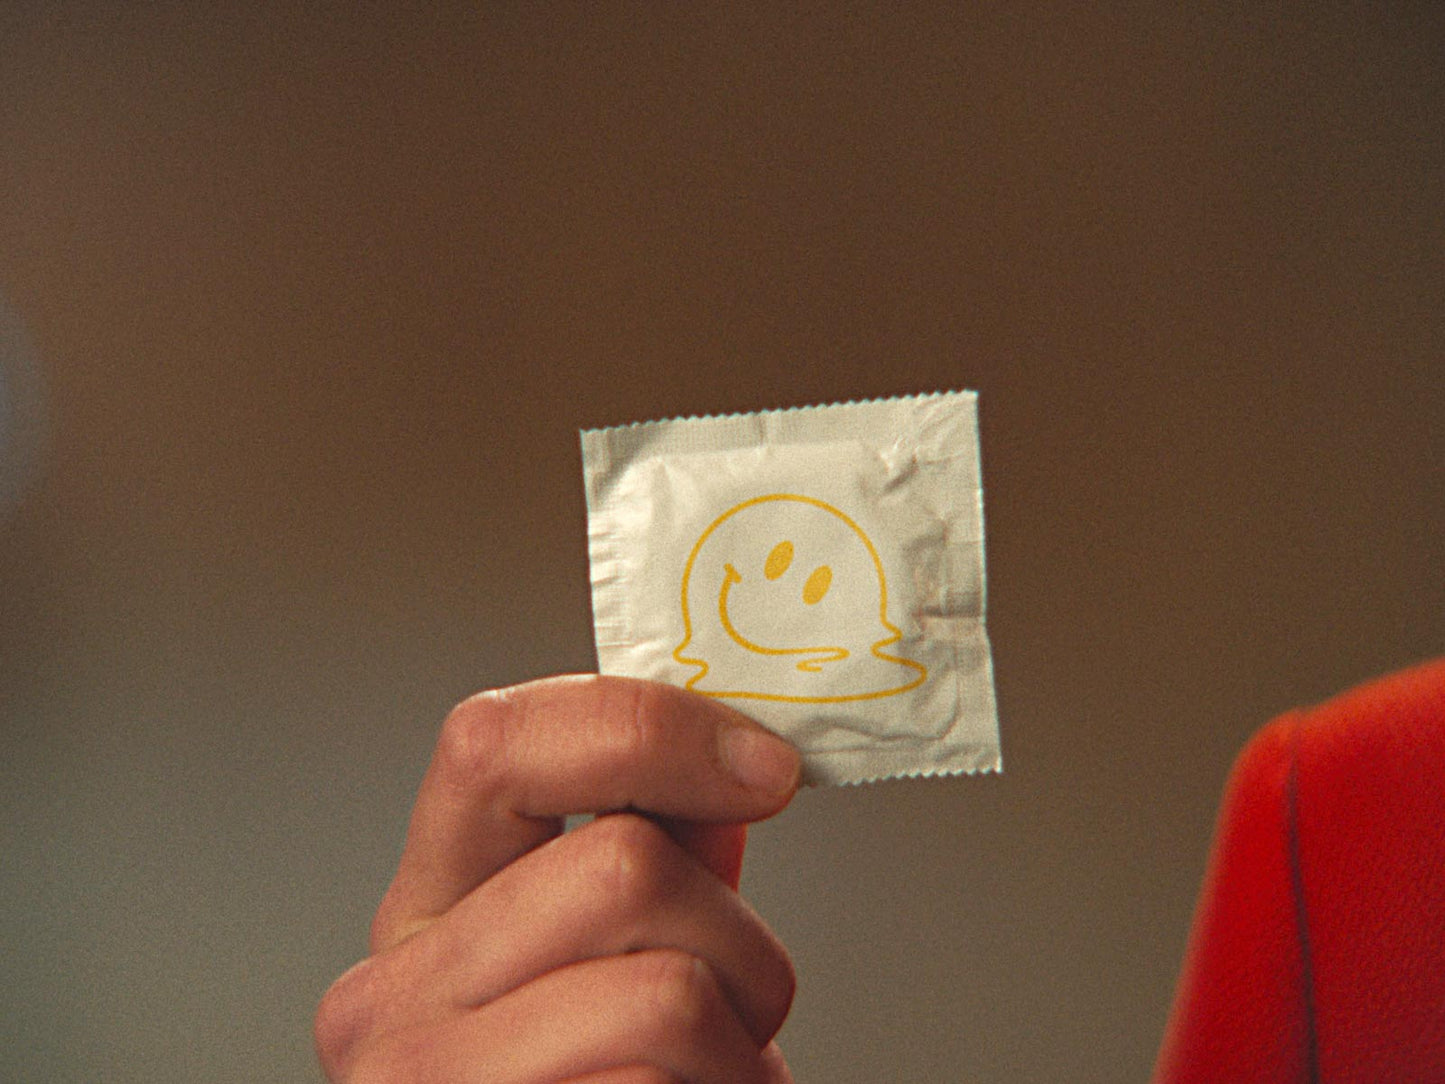 Climaxxx Condoms